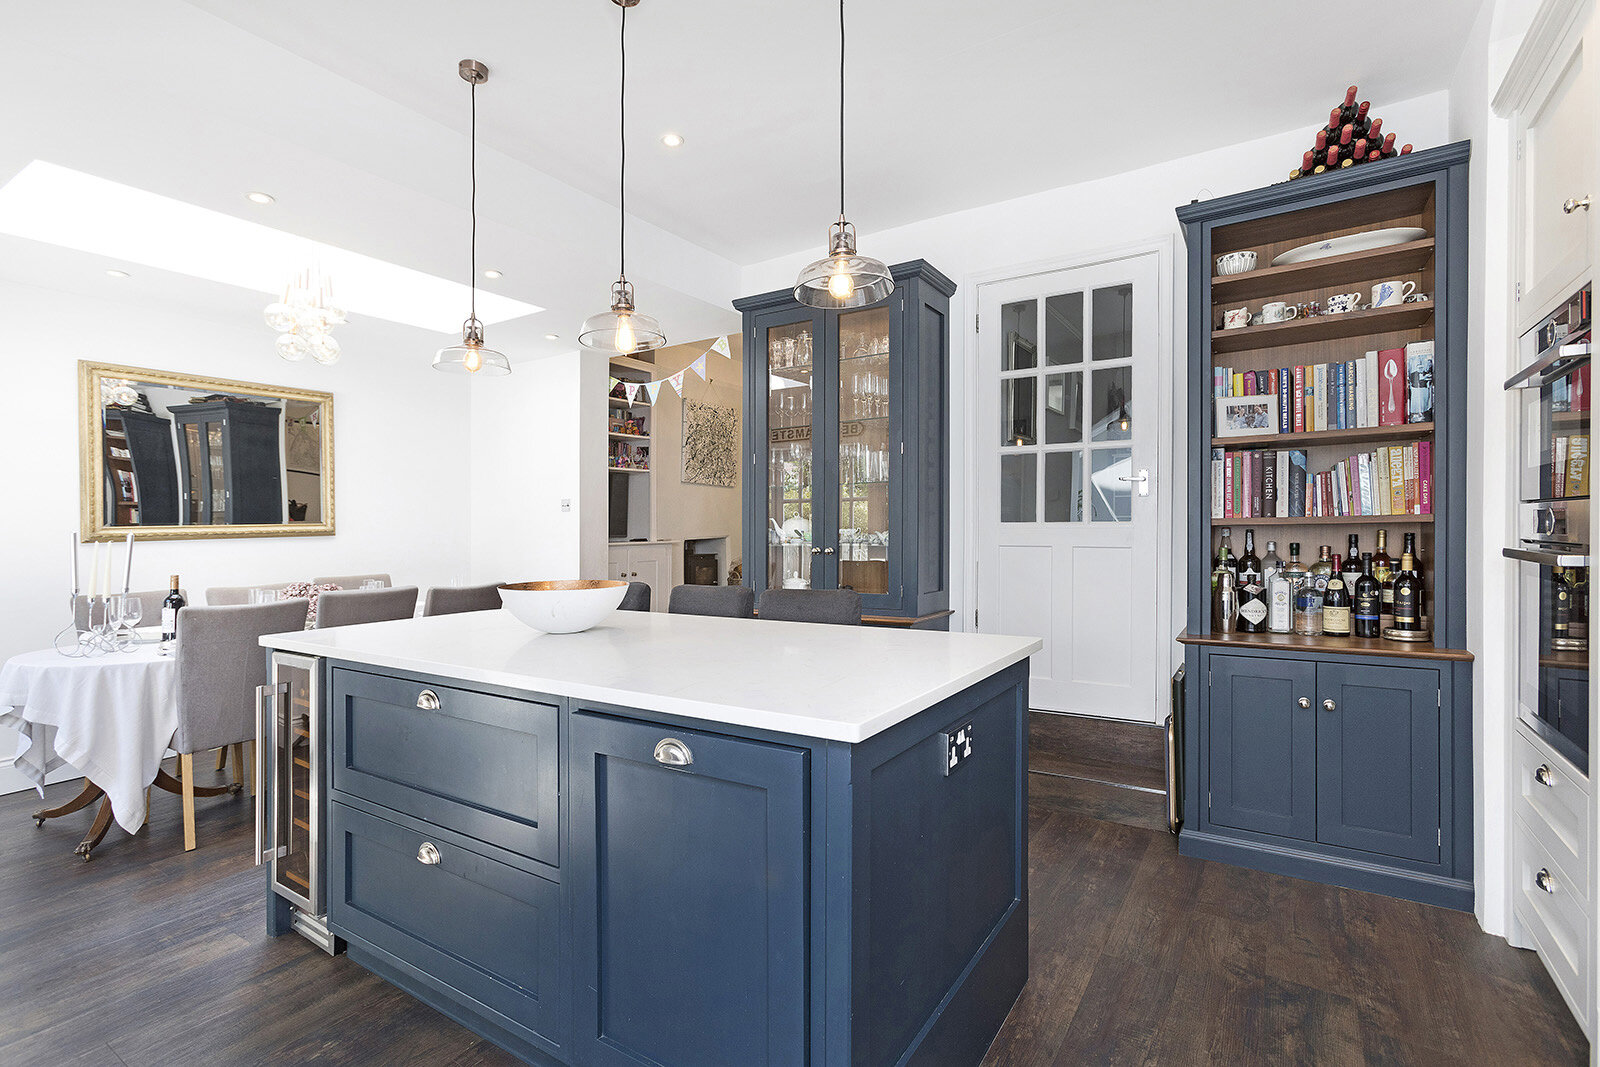 painted wooden kitchen bespoke design interior photography thebestshot.co.uk.jpg